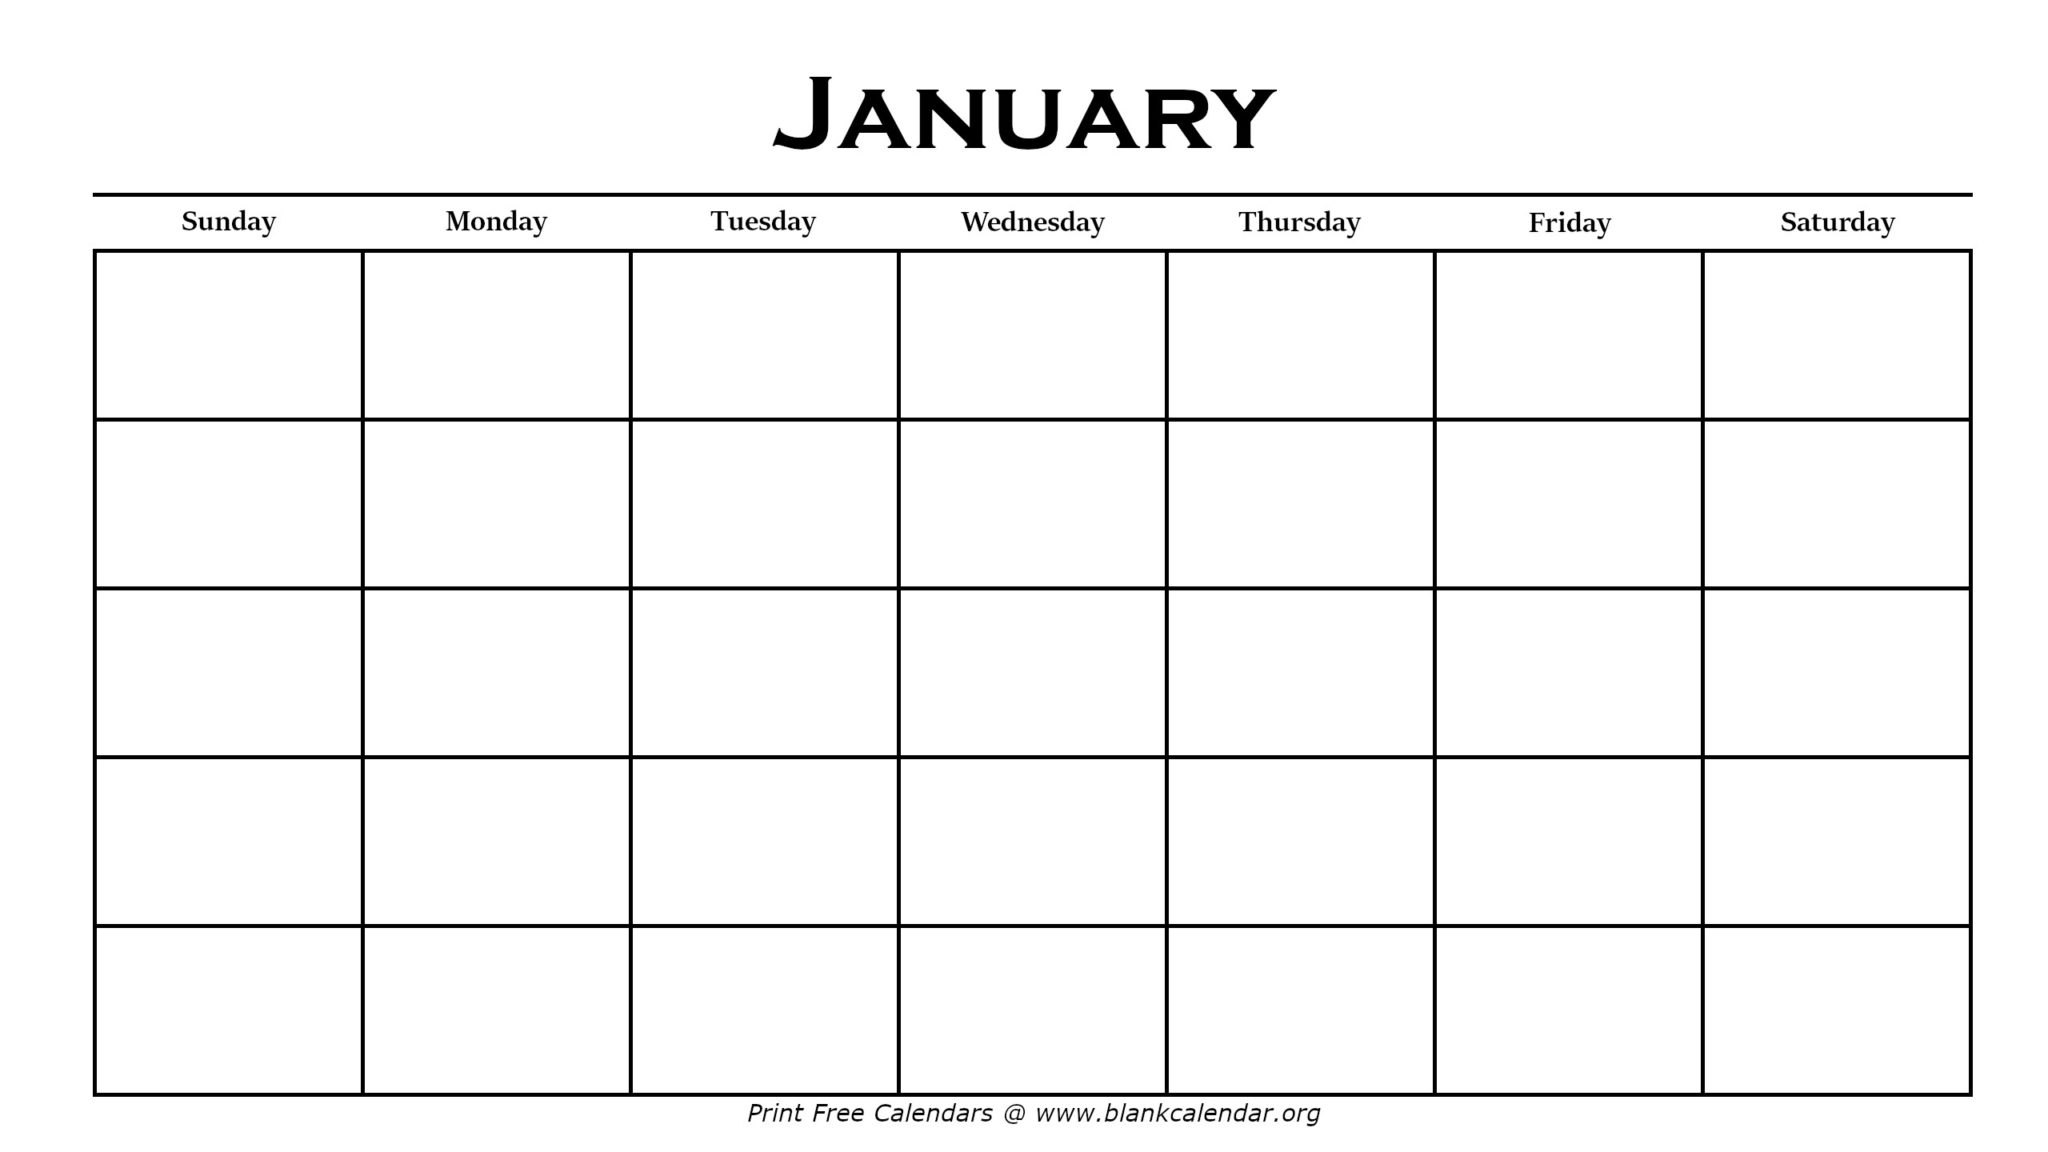 printable-january-calendars-blank-calendar